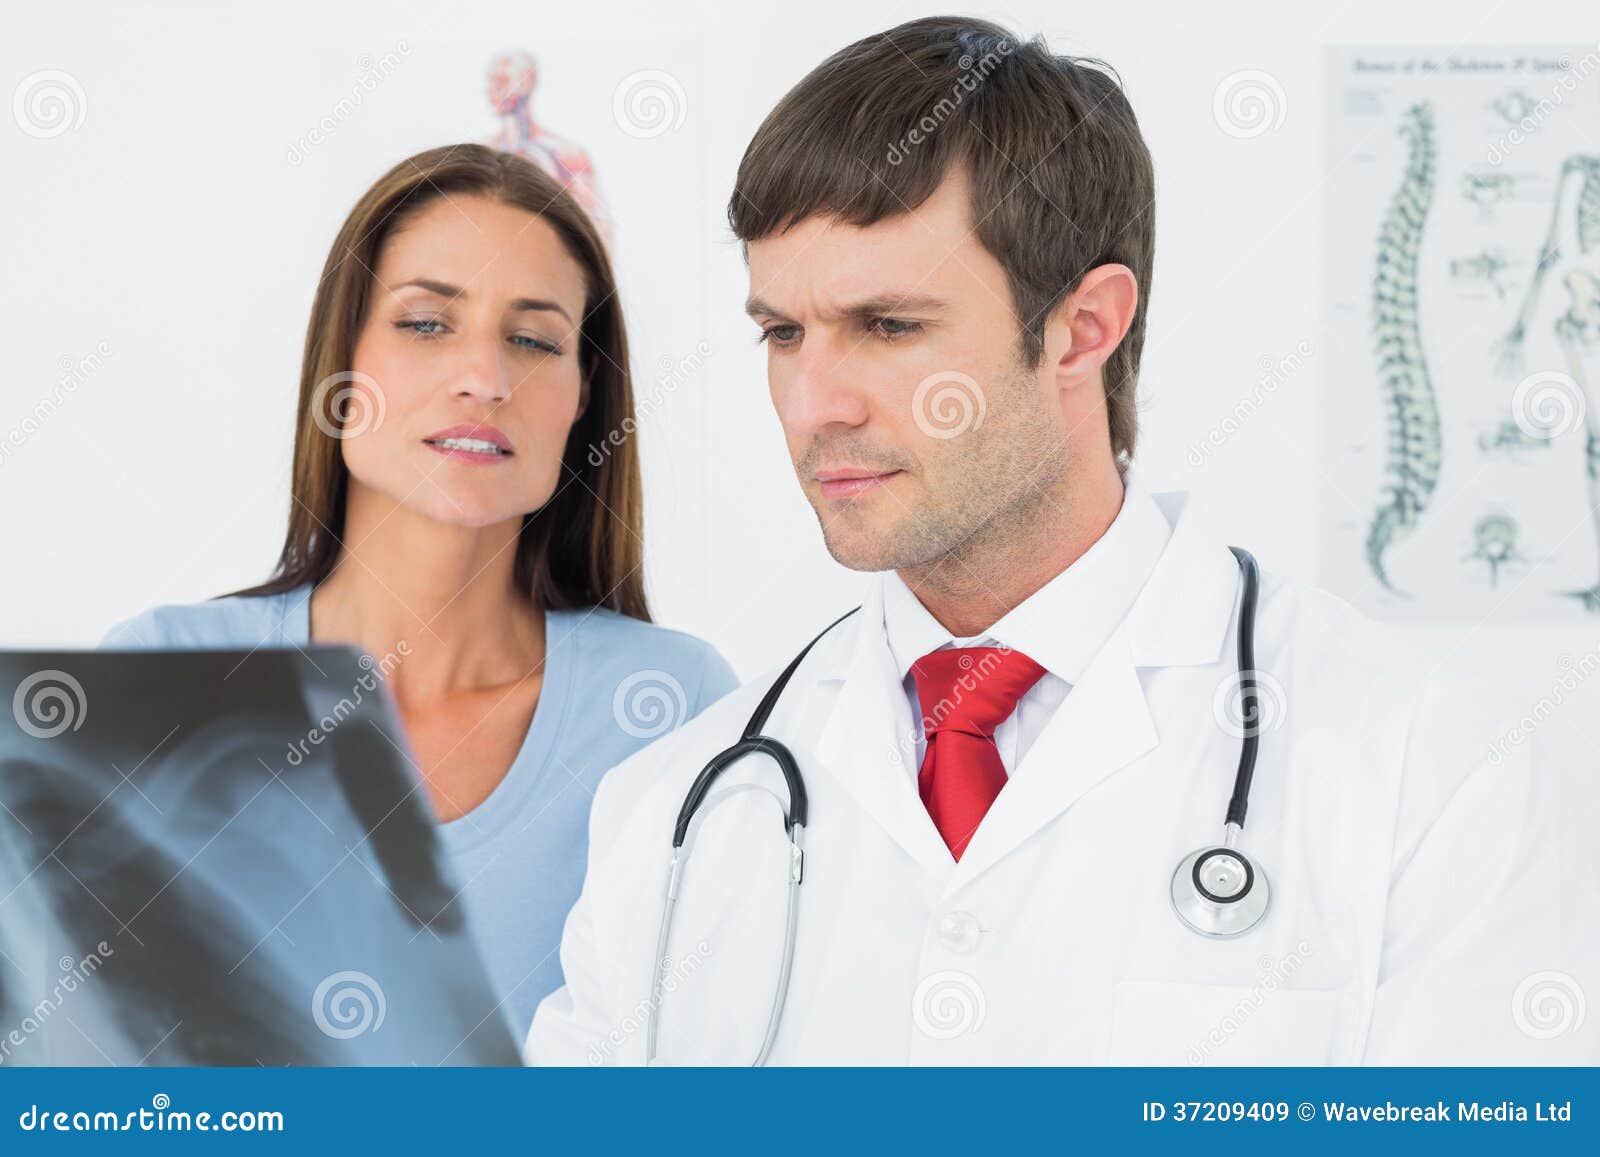 Жену врач видео. Врач с пациенткой фото на сайт. Врачи мужчина и женщина. Врач мужчина женщина пациент фото. Женщина пациент и врач мужчина обсуждают.